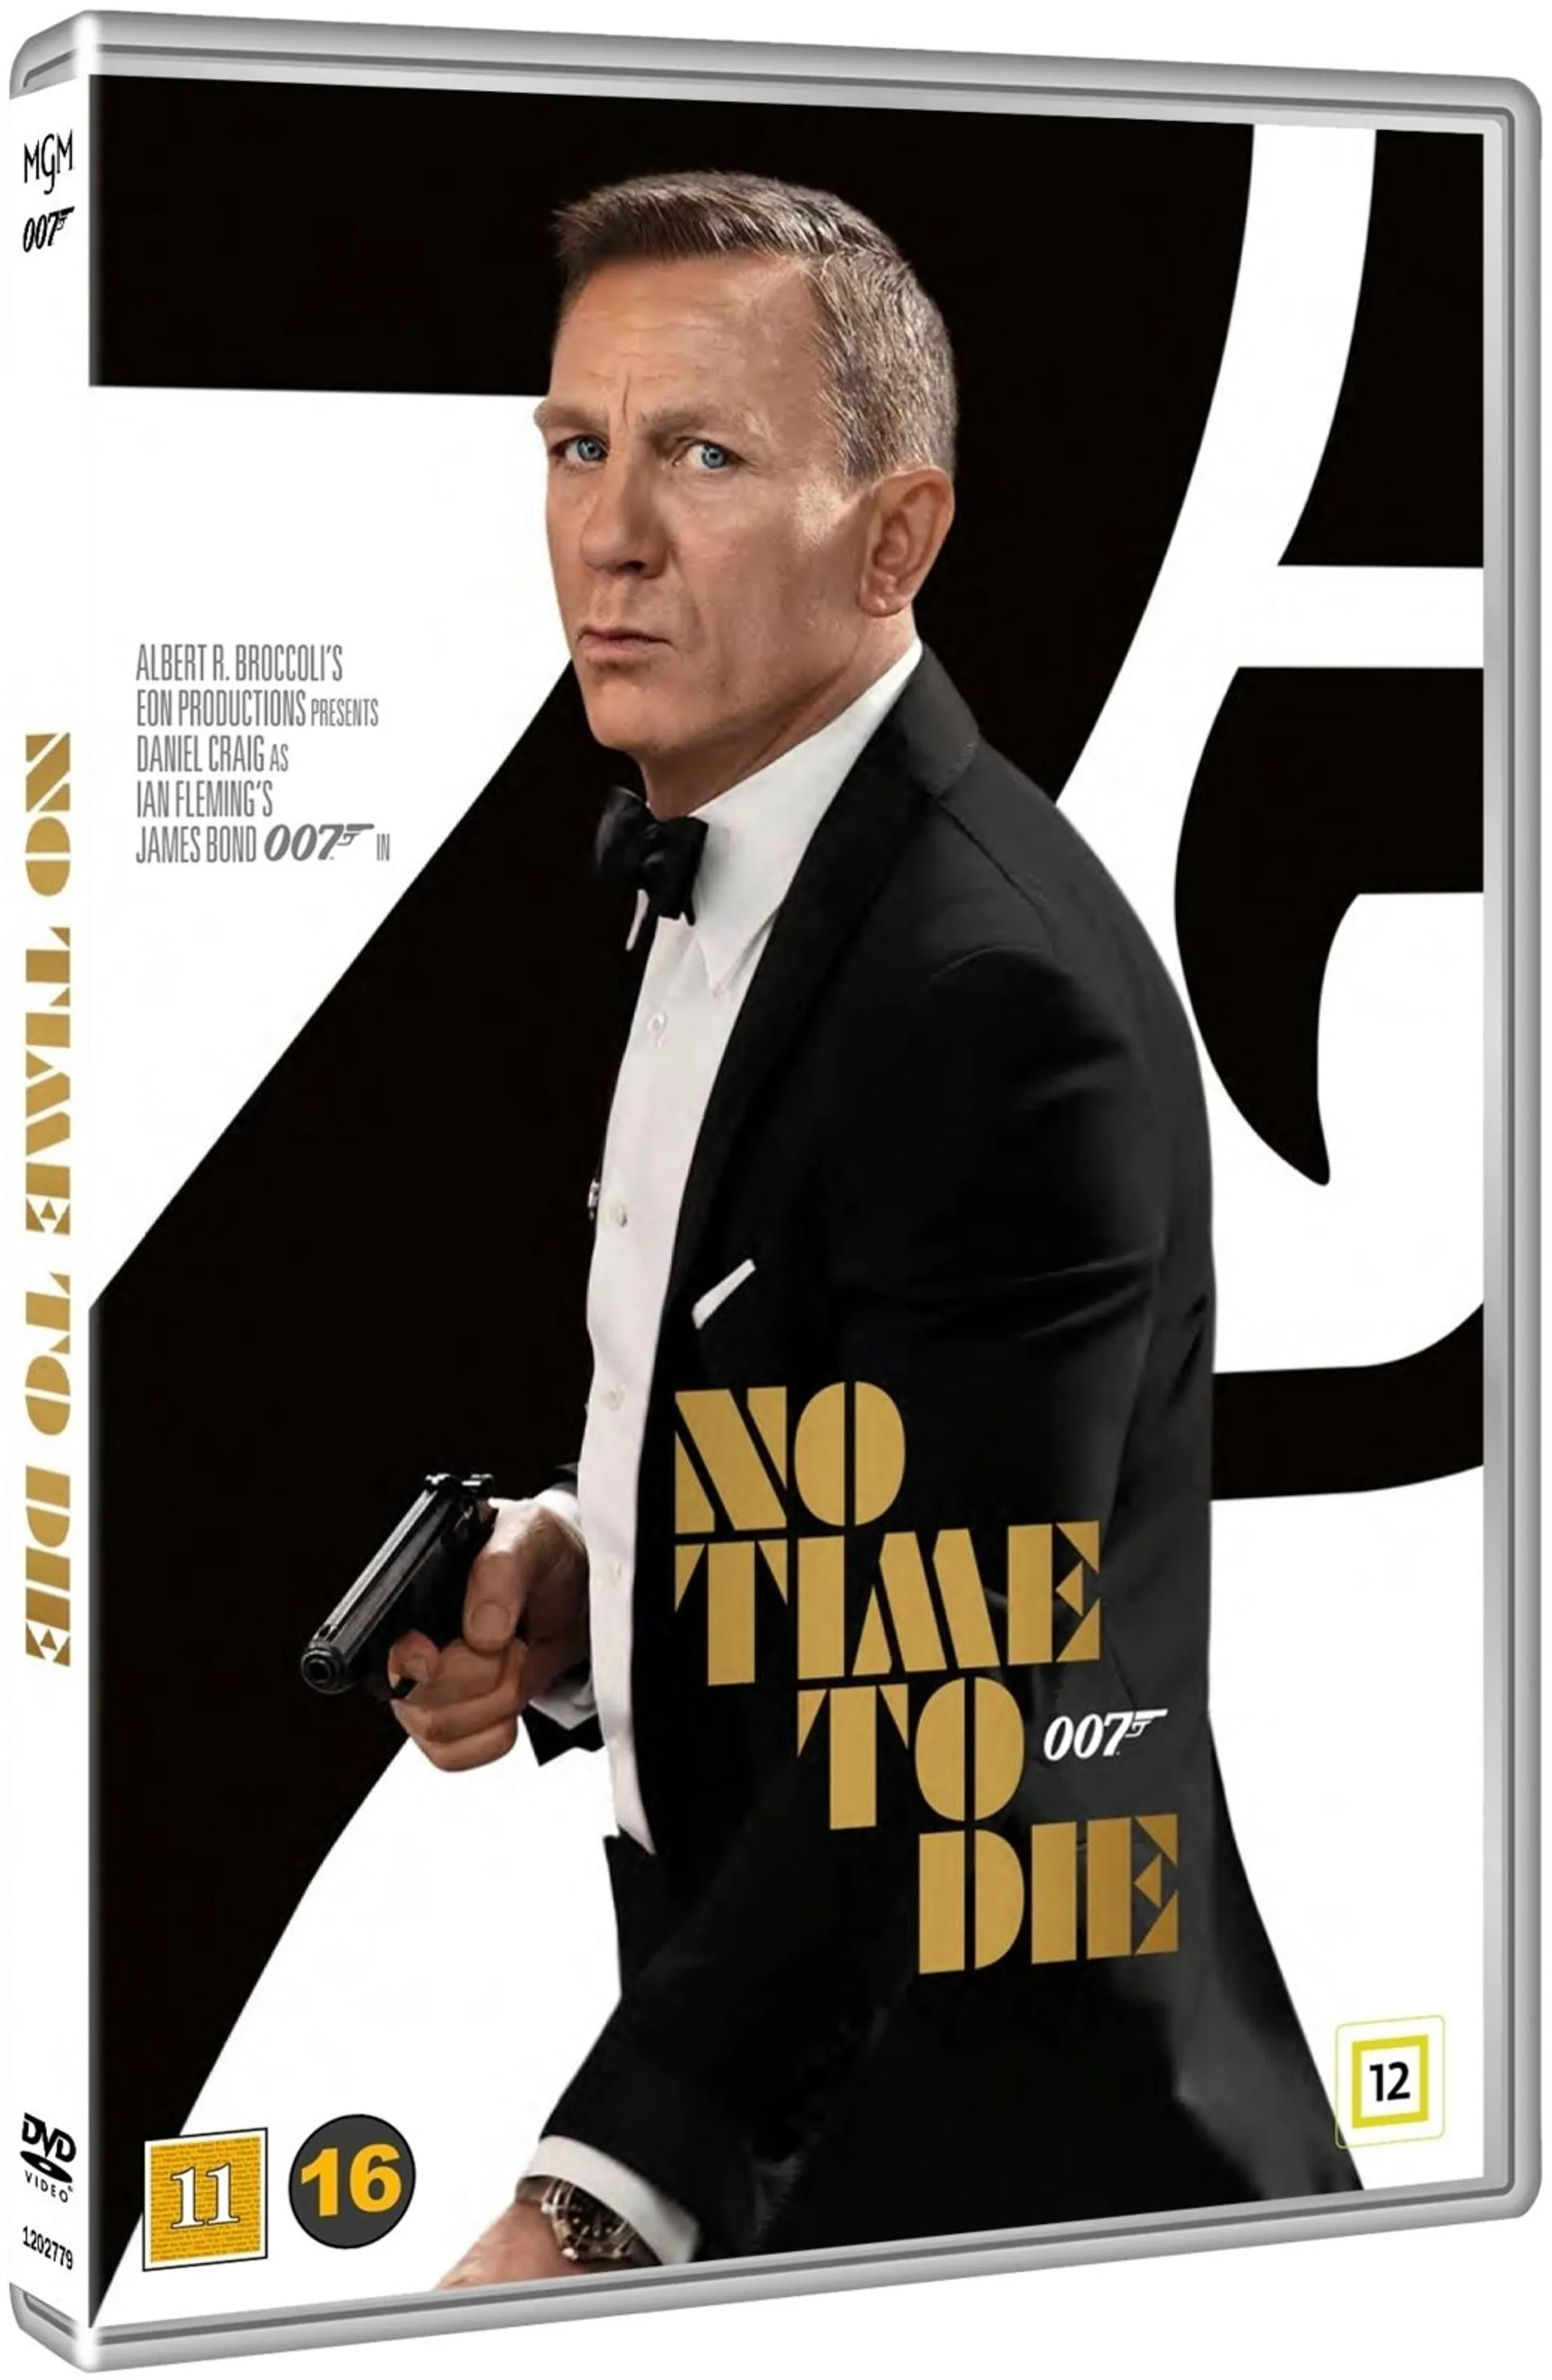 Bond James - 007 No Time To Die DVD